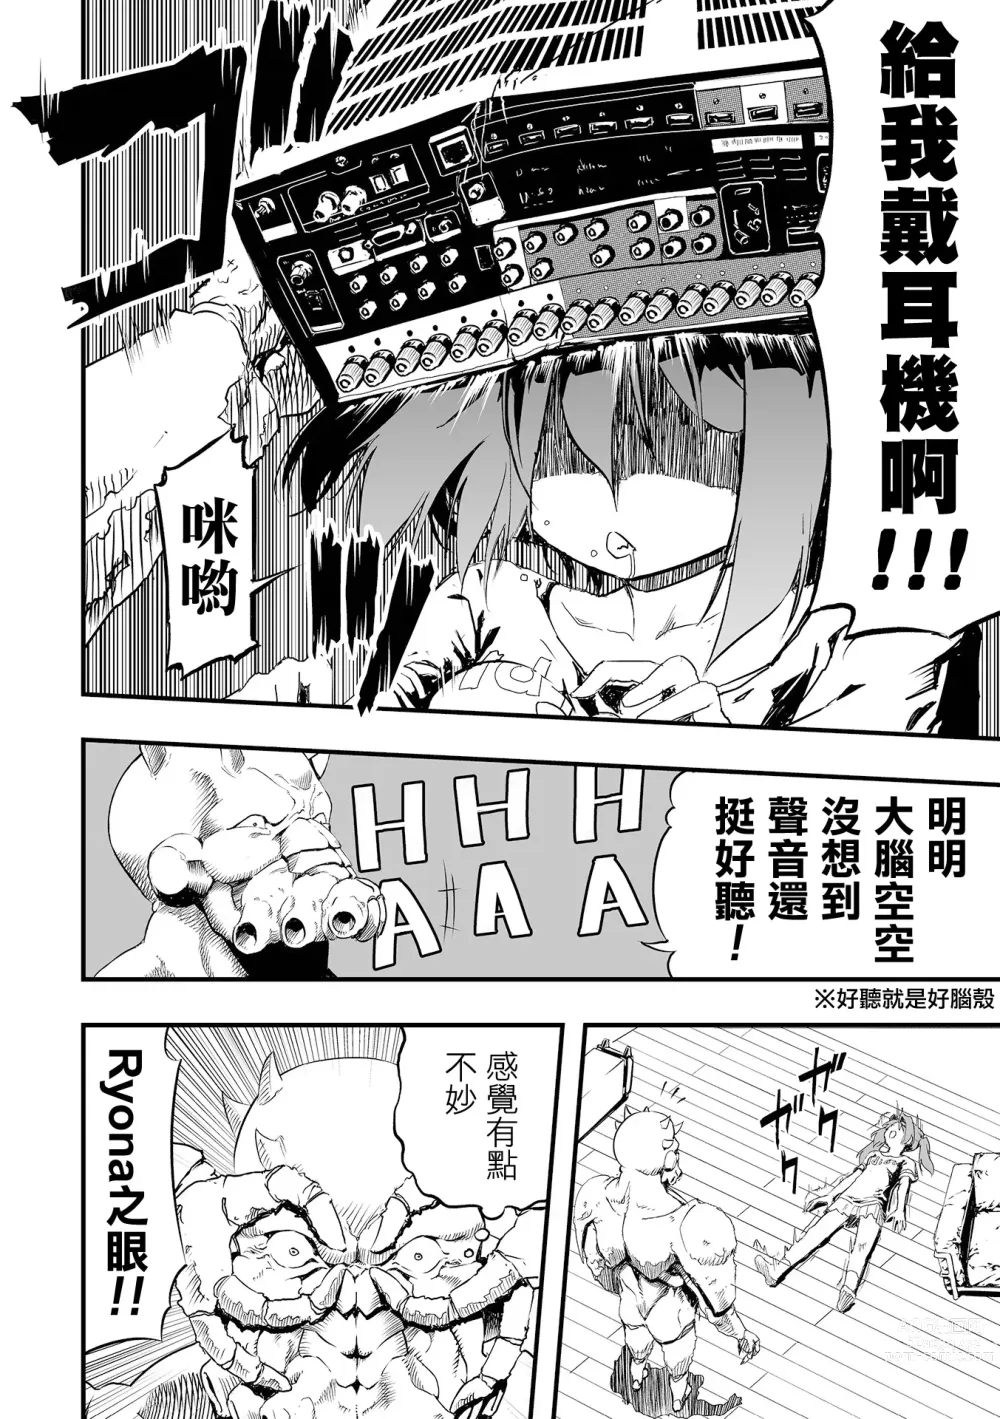 Page 7 of manga 鄰居的壁咚X